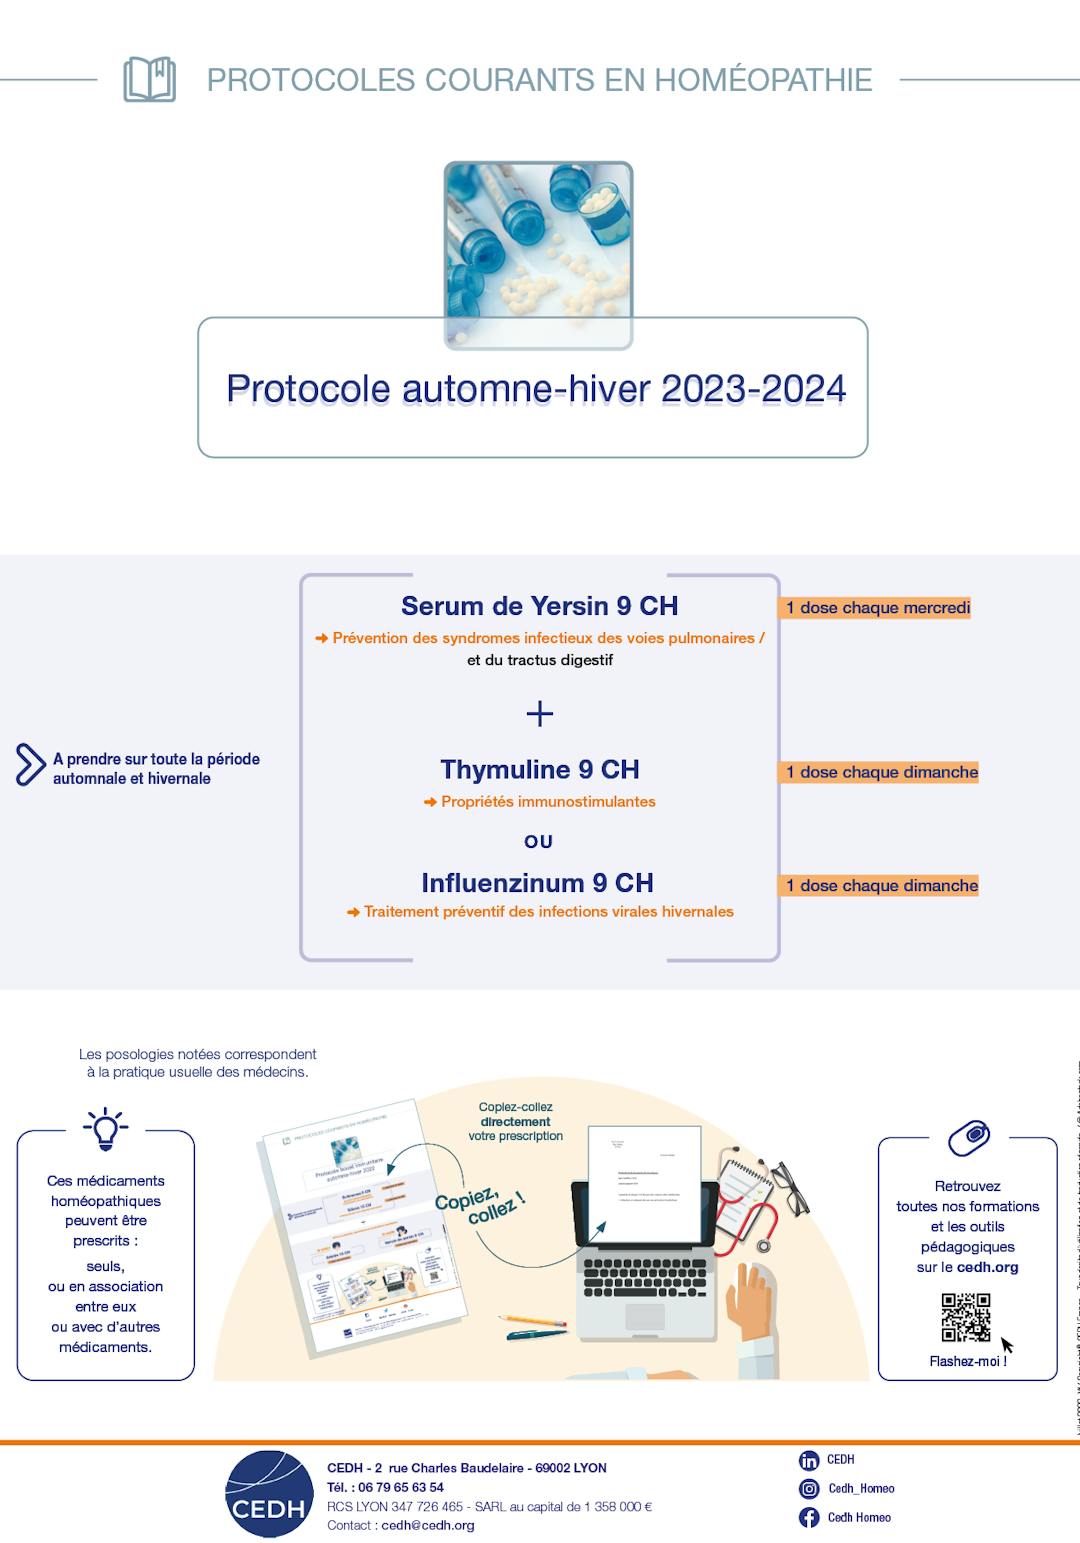 CEDH_Protocole Automne-Hiver 2023